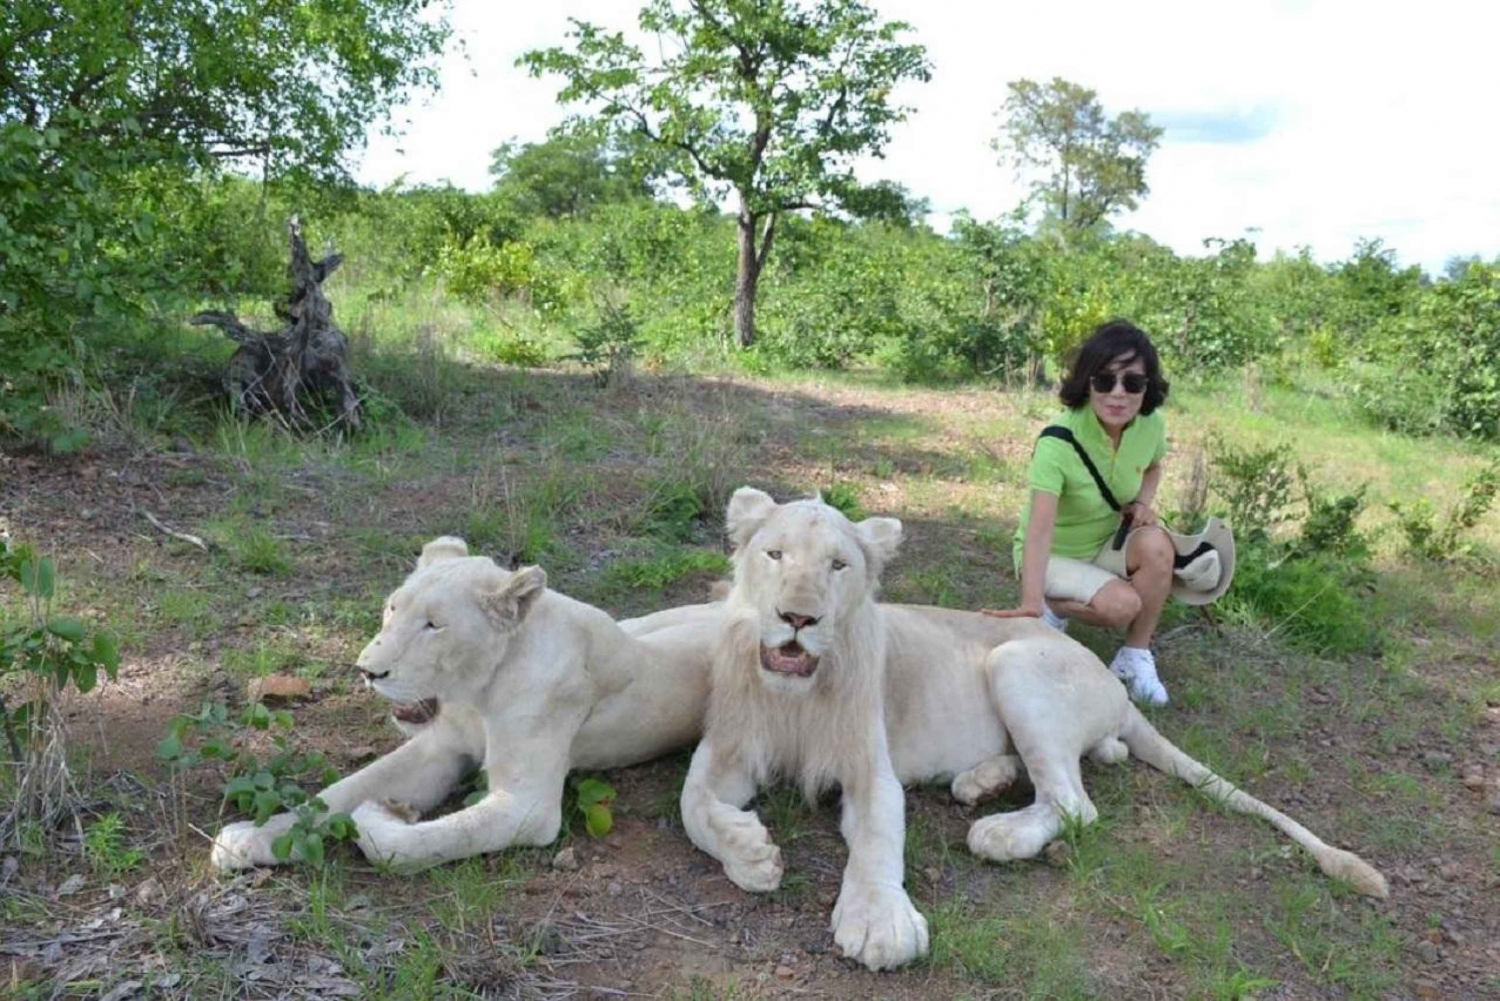 Victoria Falls: Elephant, Lion, and Cheetah Encounter